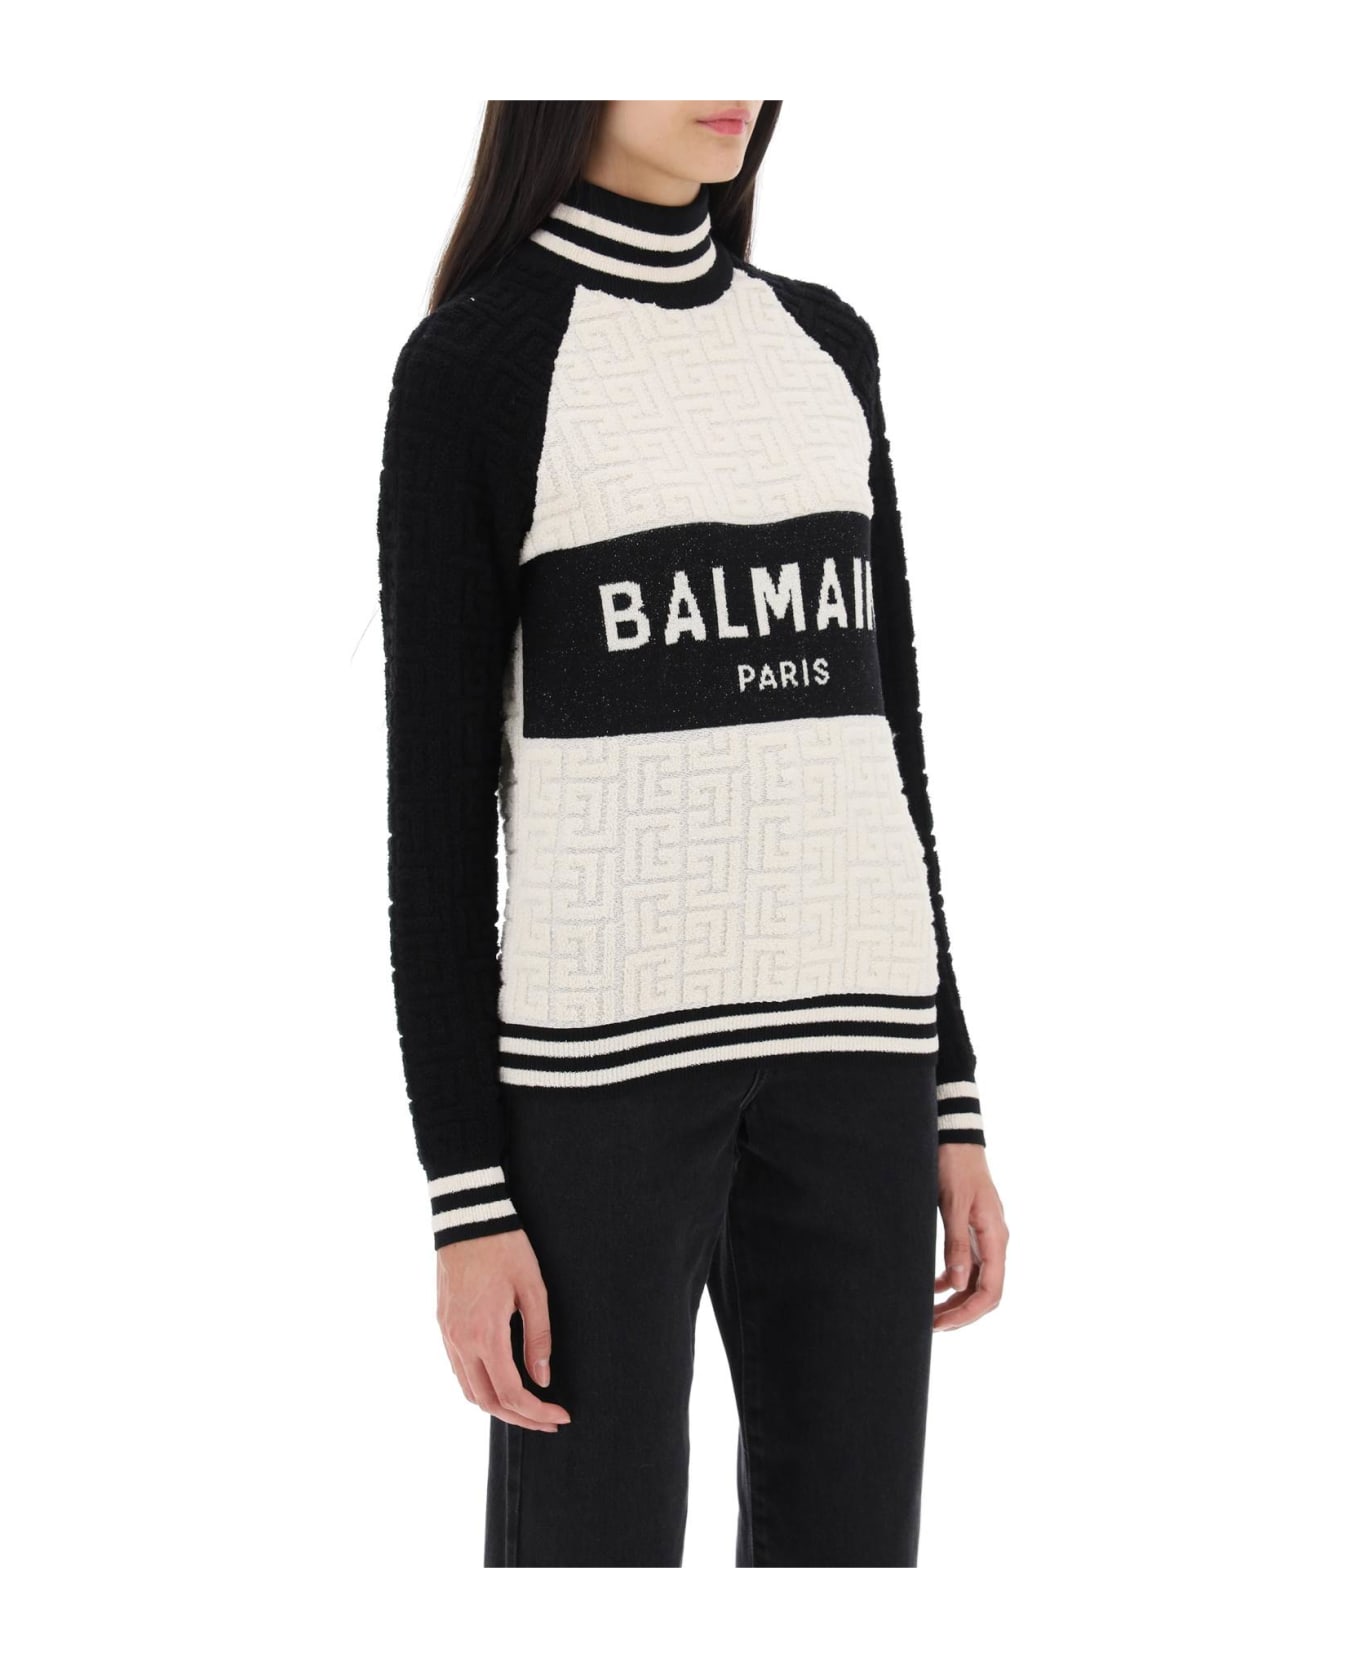 Balmain Turtleneck Sweater - NATUREL NOIR (White)